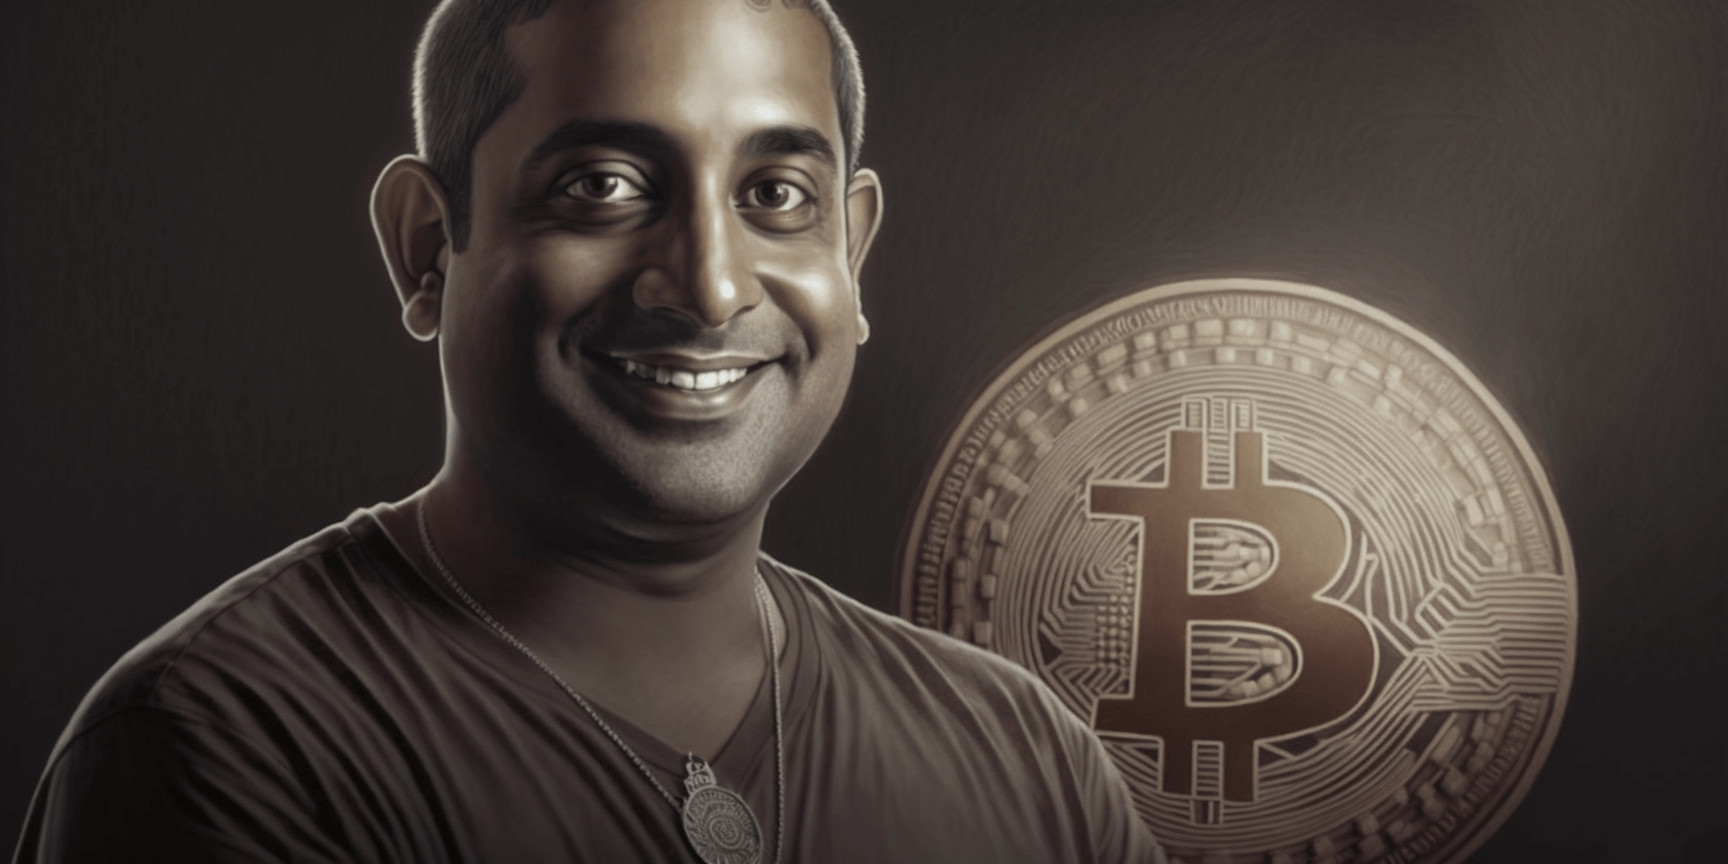 Balaji Srinivasan holding bitcoin, image generated by Midjourney. 